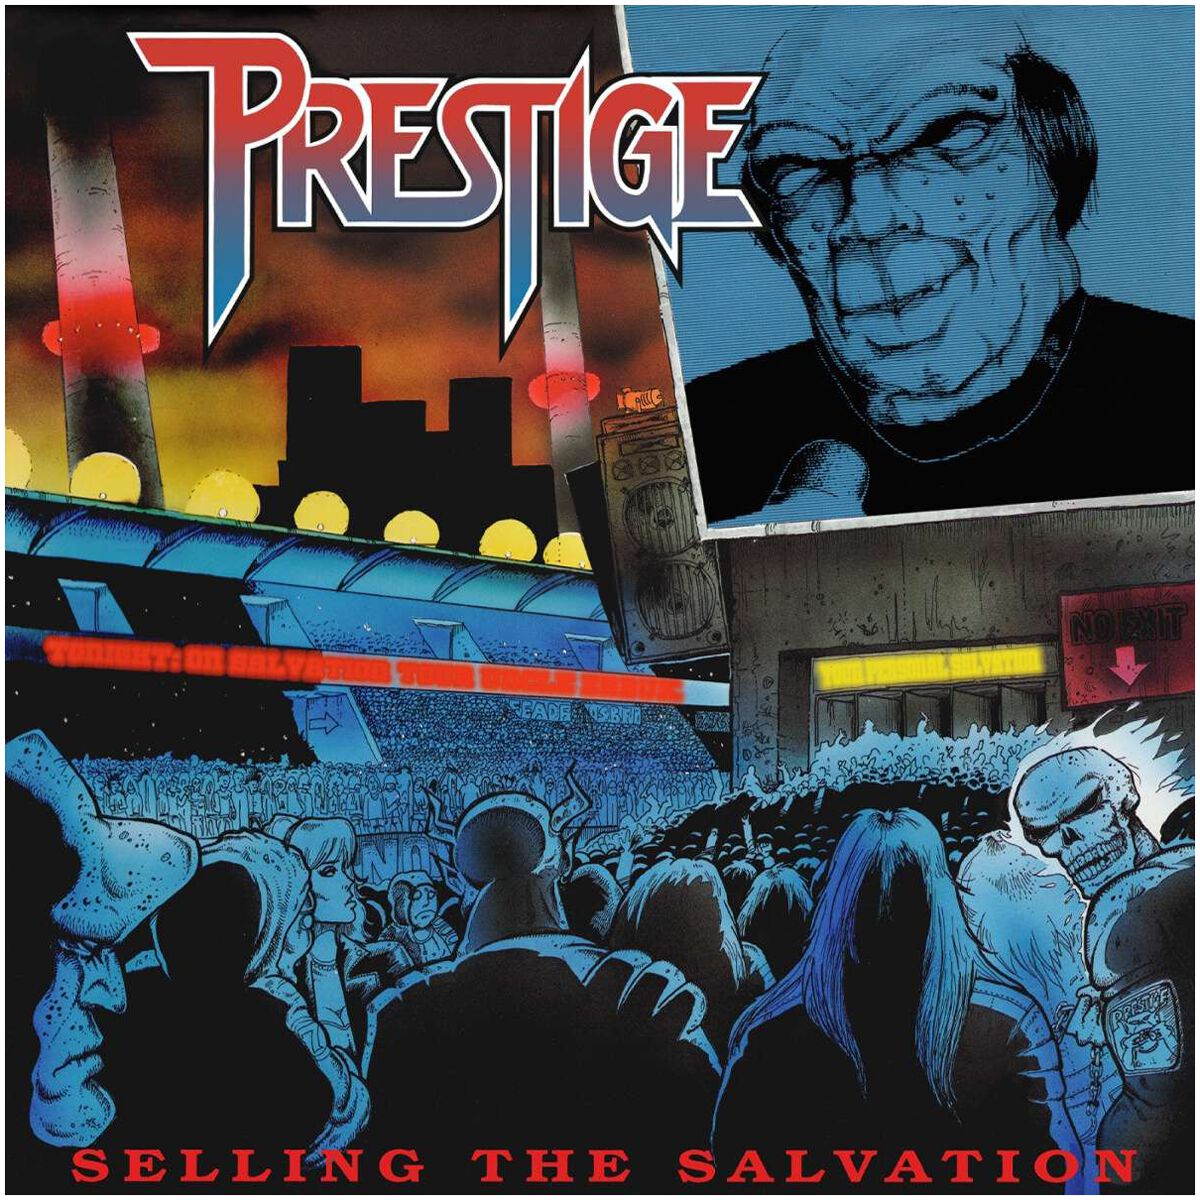 Selling the salvation von Prestige - CD (Digipak, Re-Release)